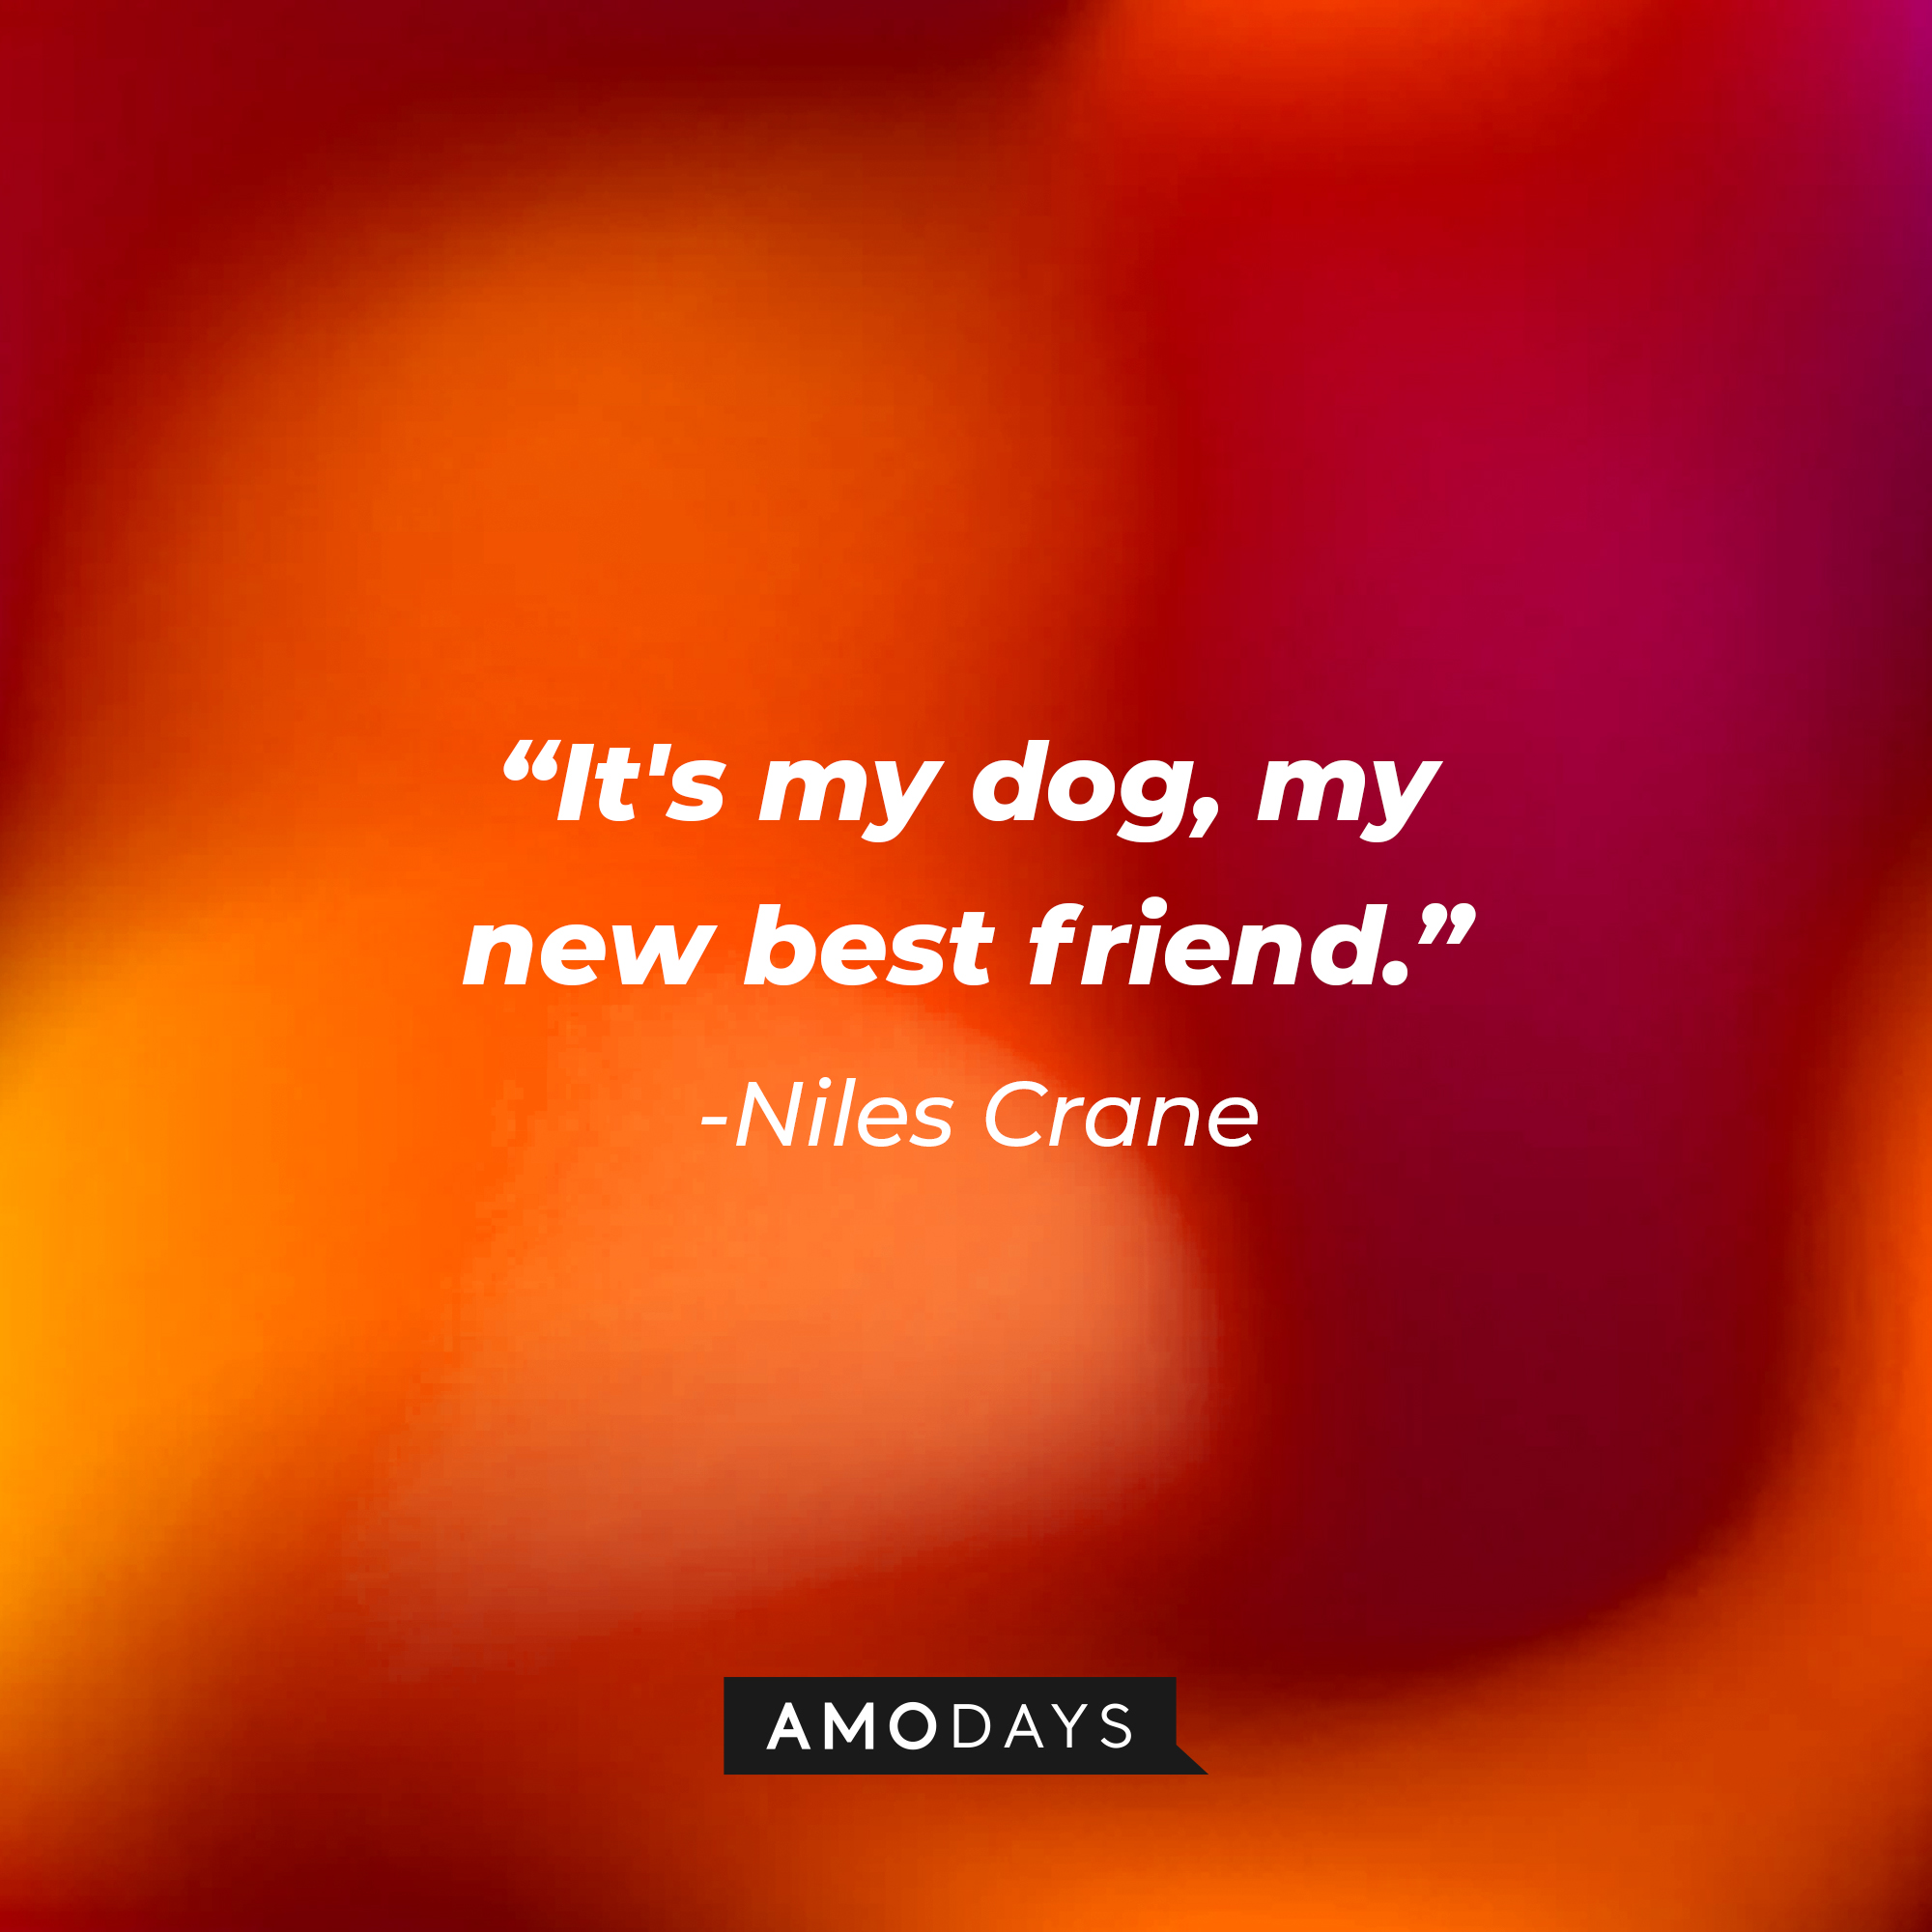 Niles Crane’s quote:  “It's my dog, my new best friend.” | Source: AmoDays